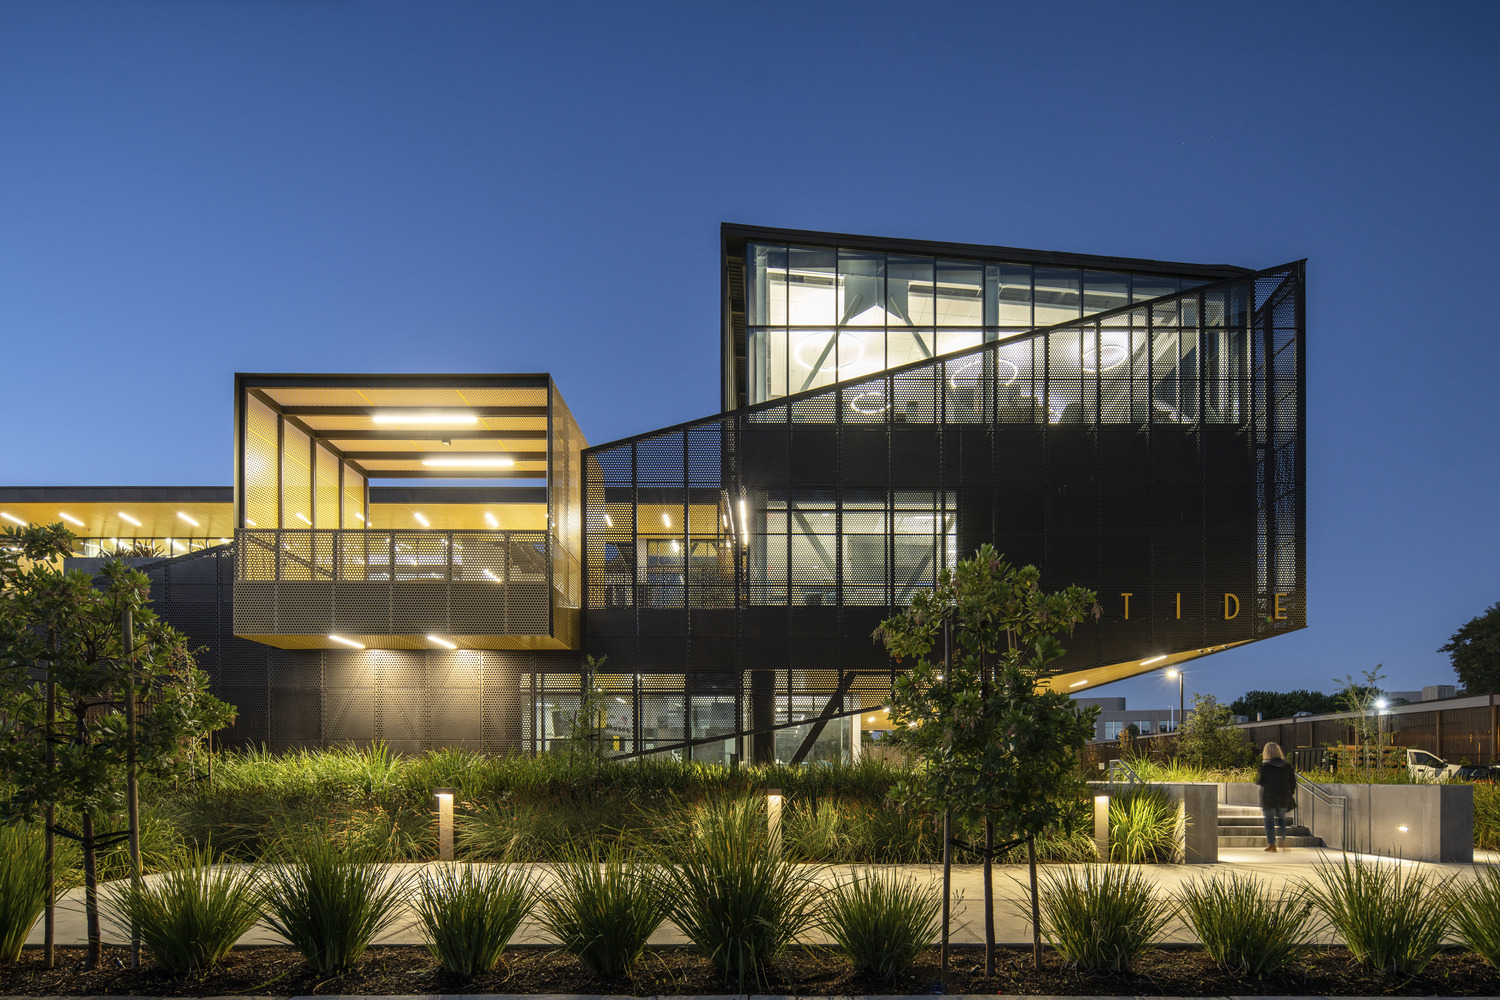 Pictured: TIDE Academy, a groundbreaking public high school in Menlo Park, Calif., designed by LPA. Photo courtesy LPA